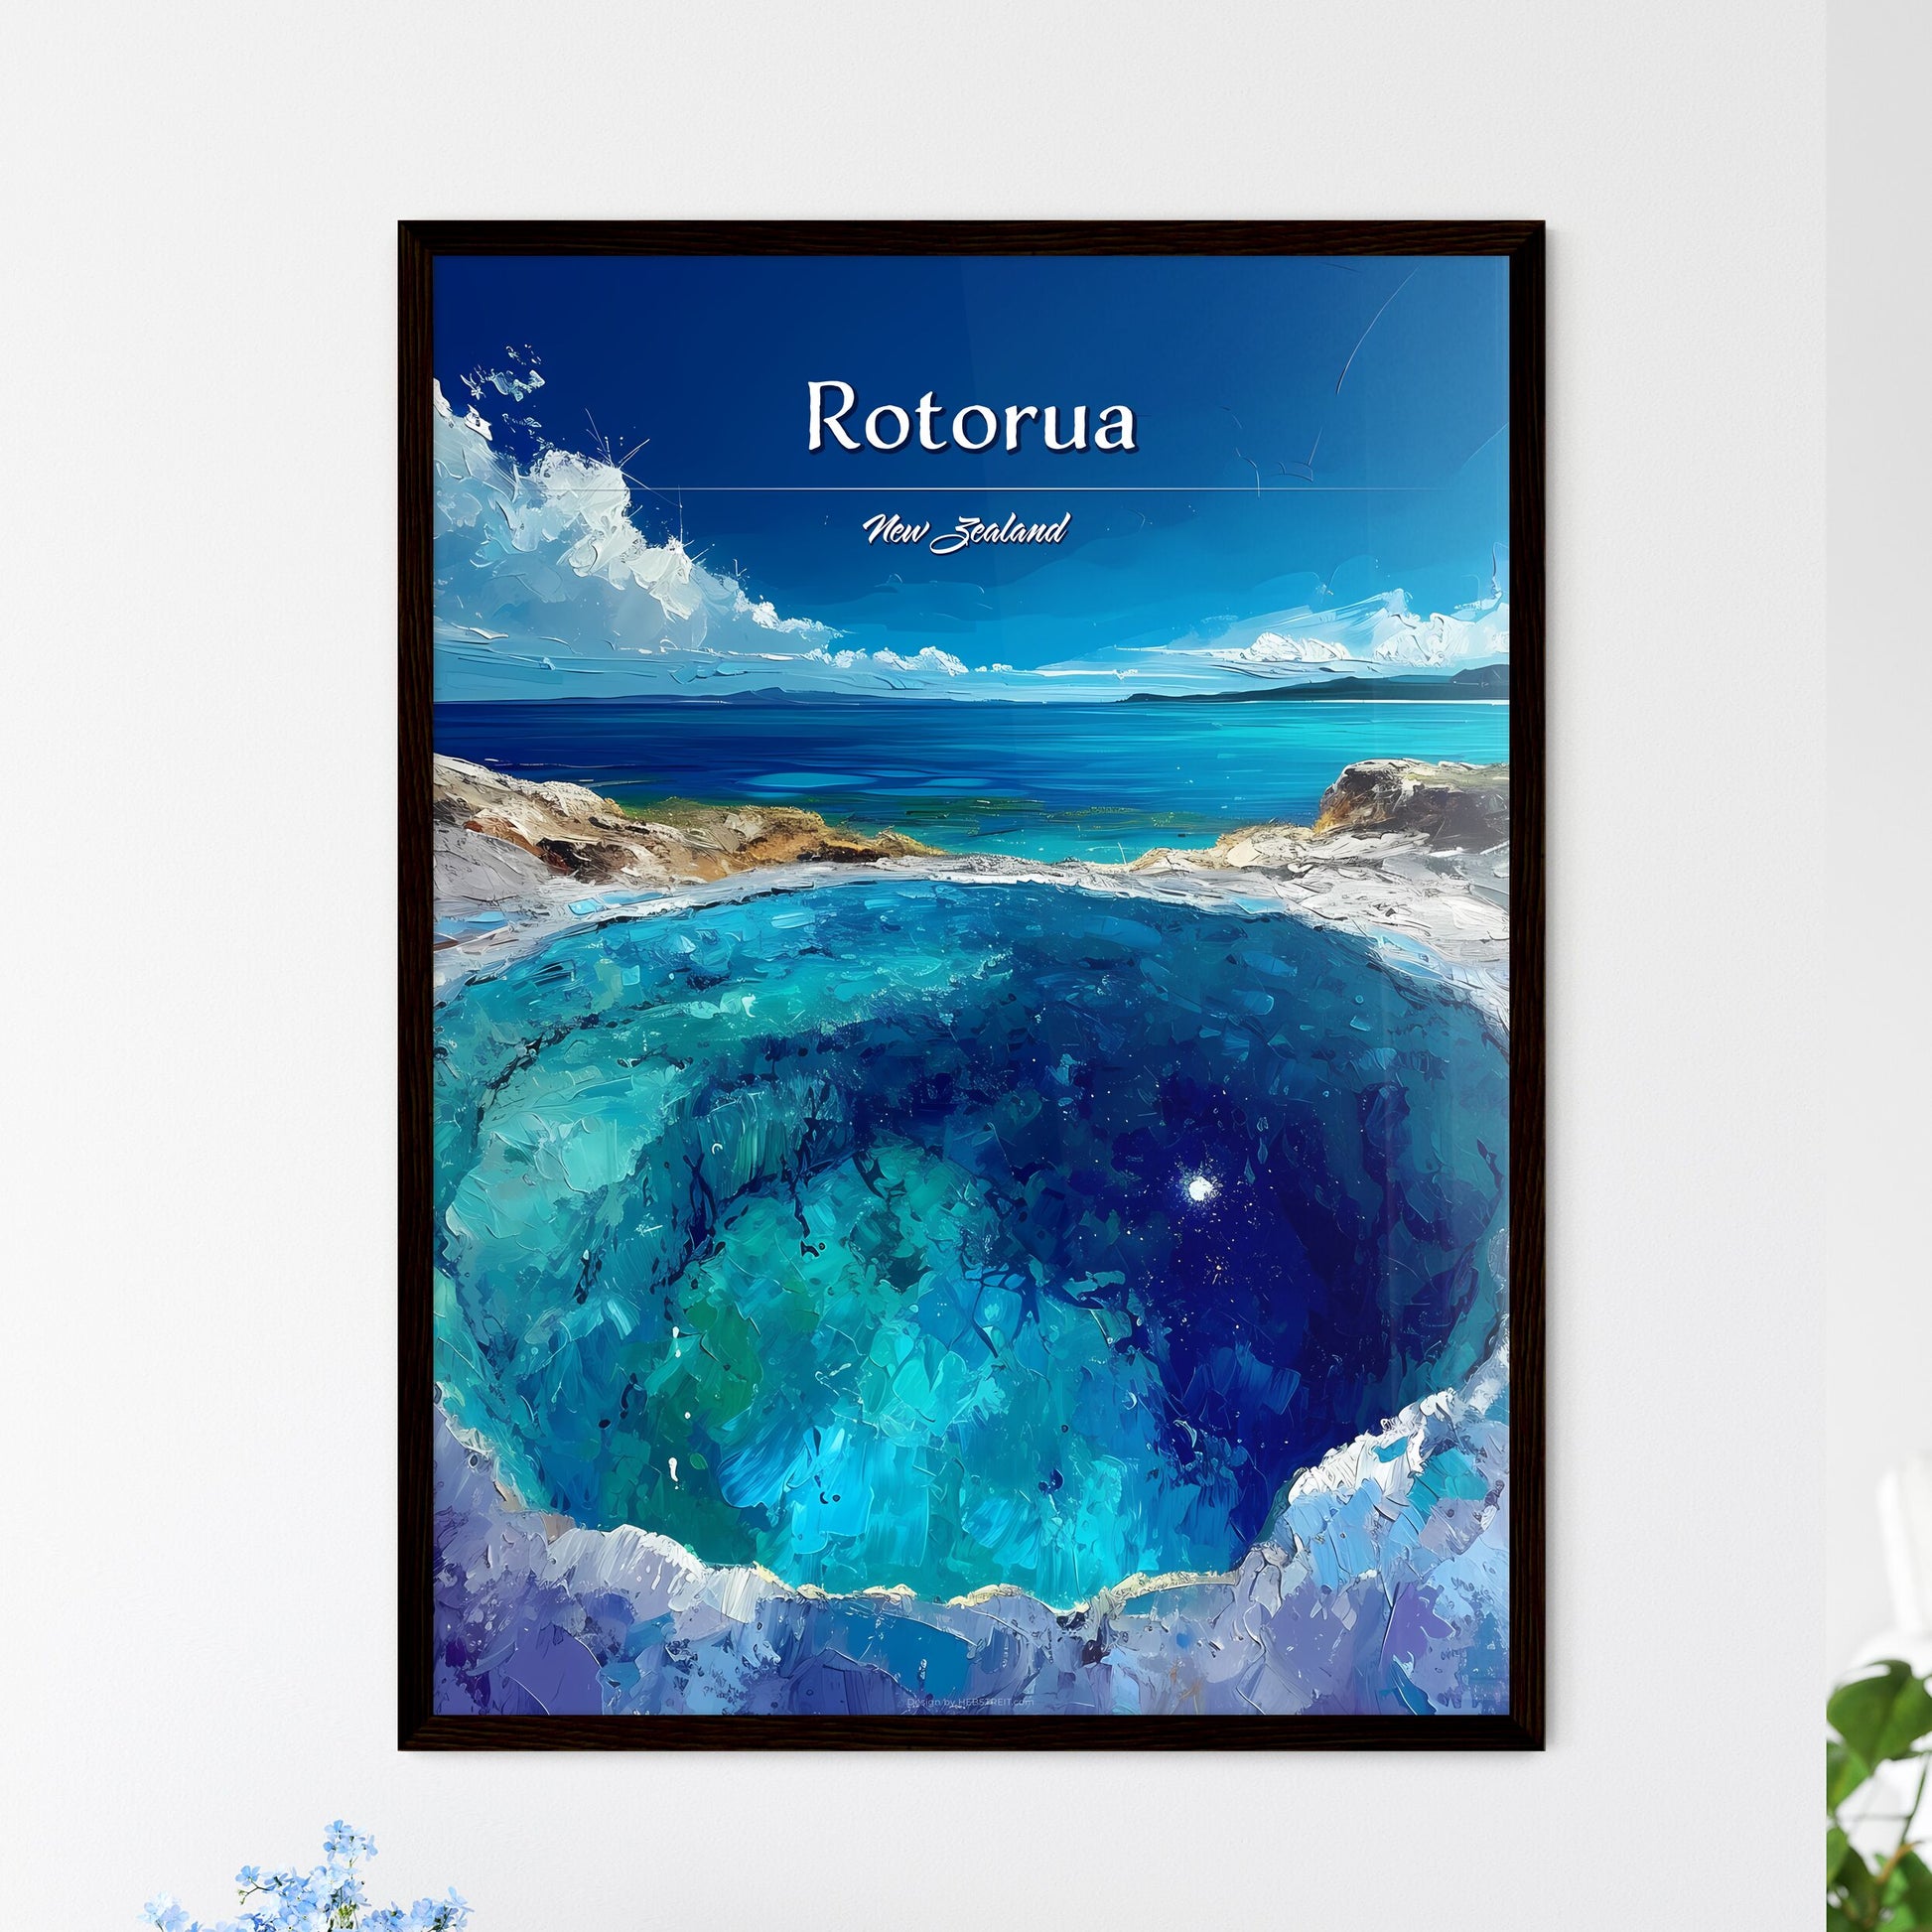 Rotorua, New Zealand - Art print of a blue pool of water on a rocky shore Default Title